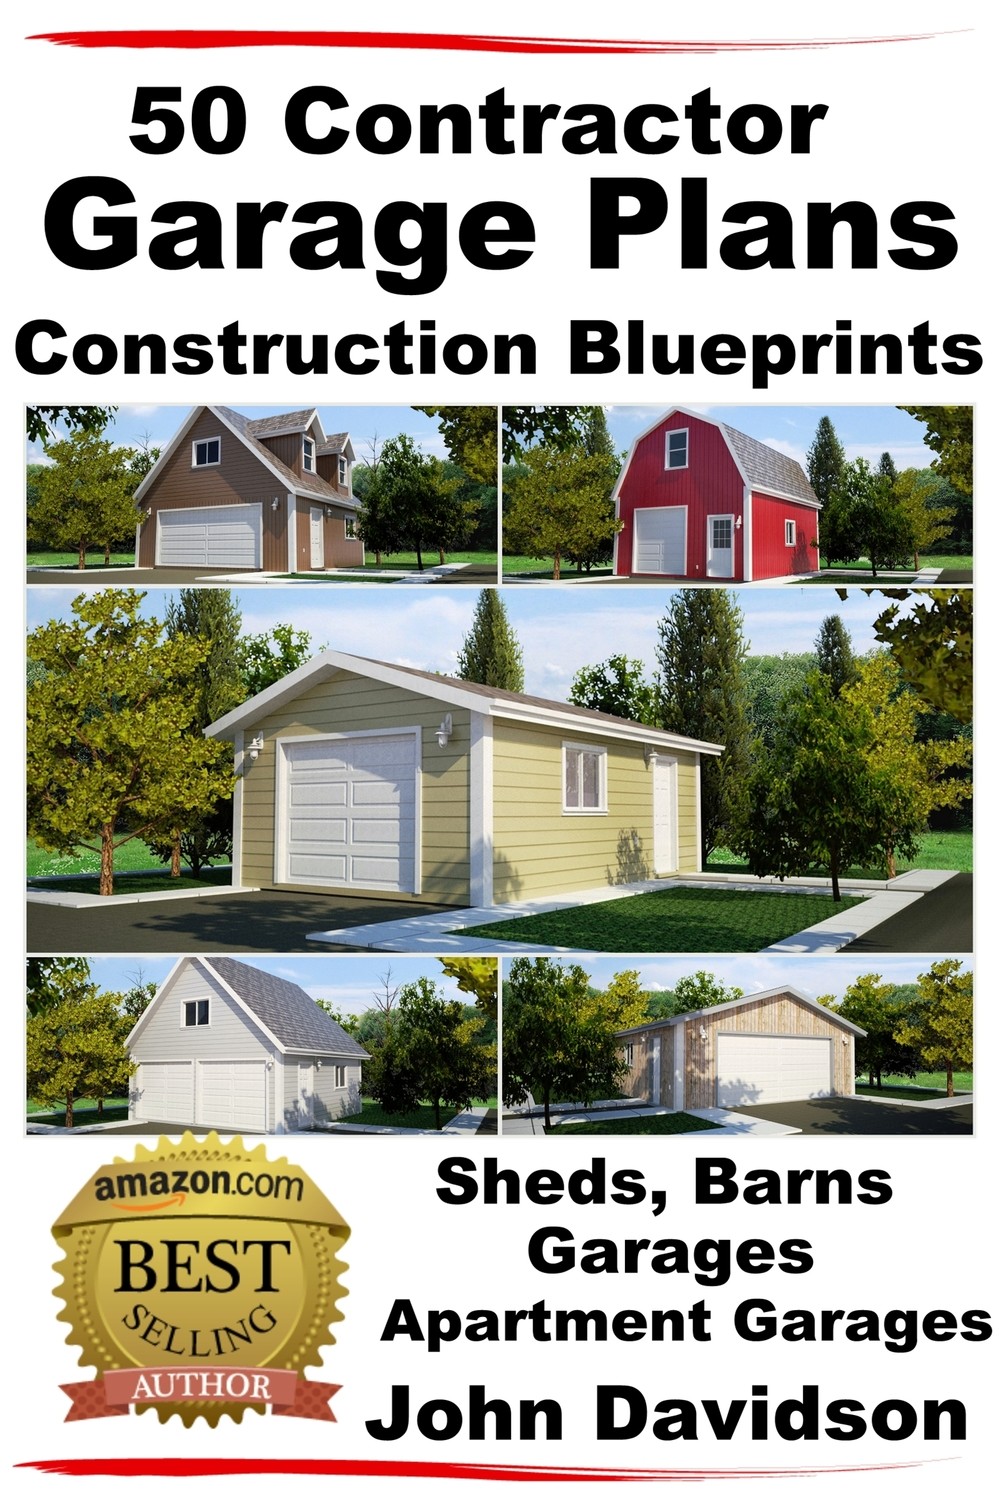 50 Contractor Garage Plans - Free Book